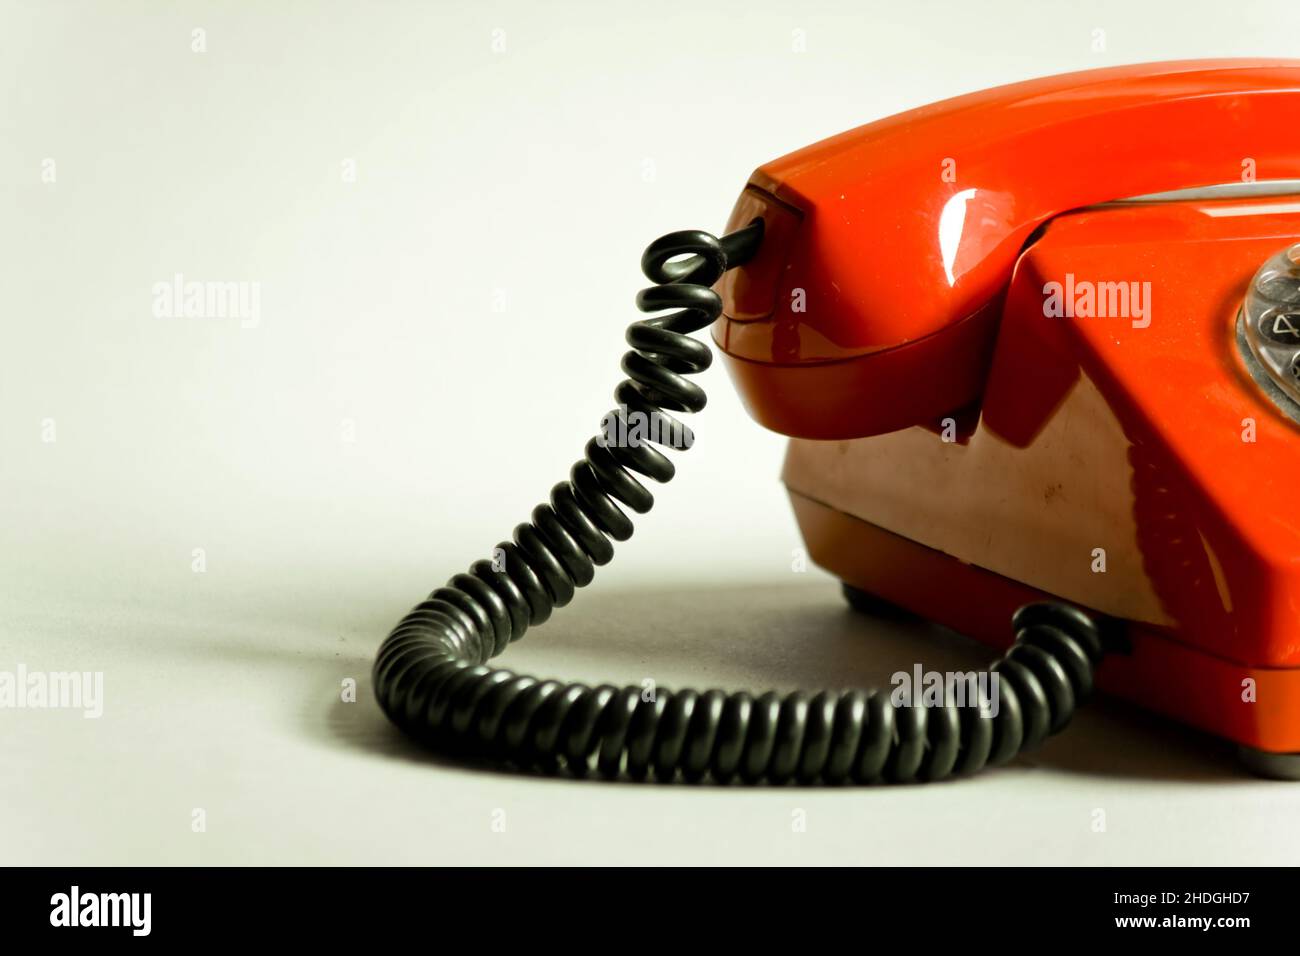 telephone, retro, rotary phone, phone, phones, telephones, old fashioned, retro style, rotary phones Stock Photo